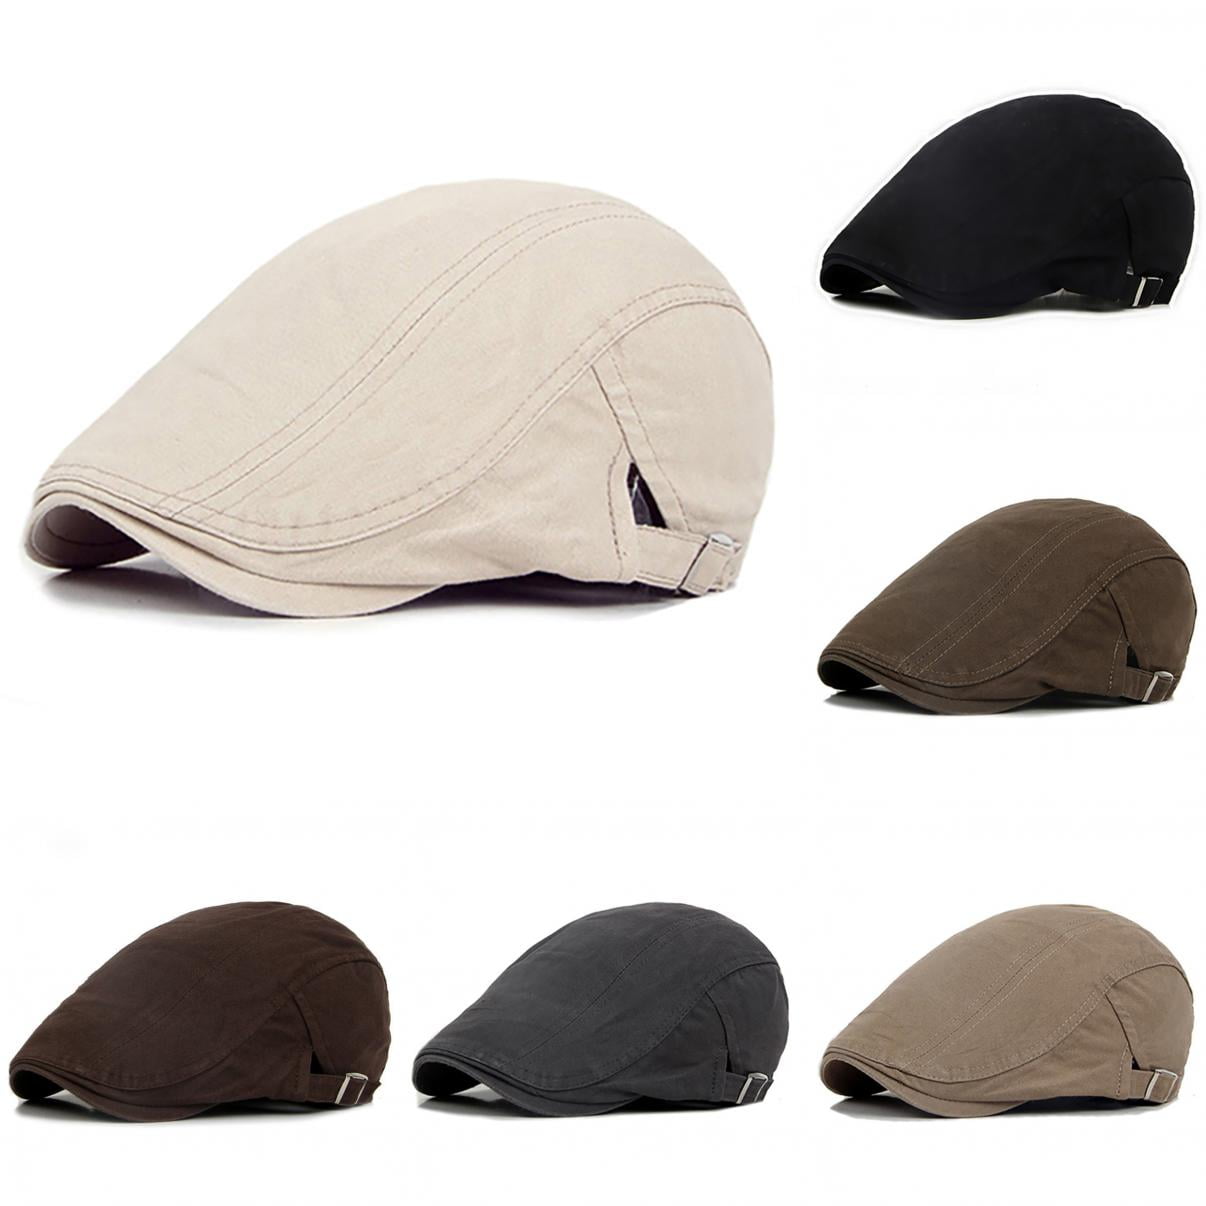 Limei Men's Newsboy Caps Flat Cap Gatsby Golf Fitted Hats Beret Ivy Cap ...